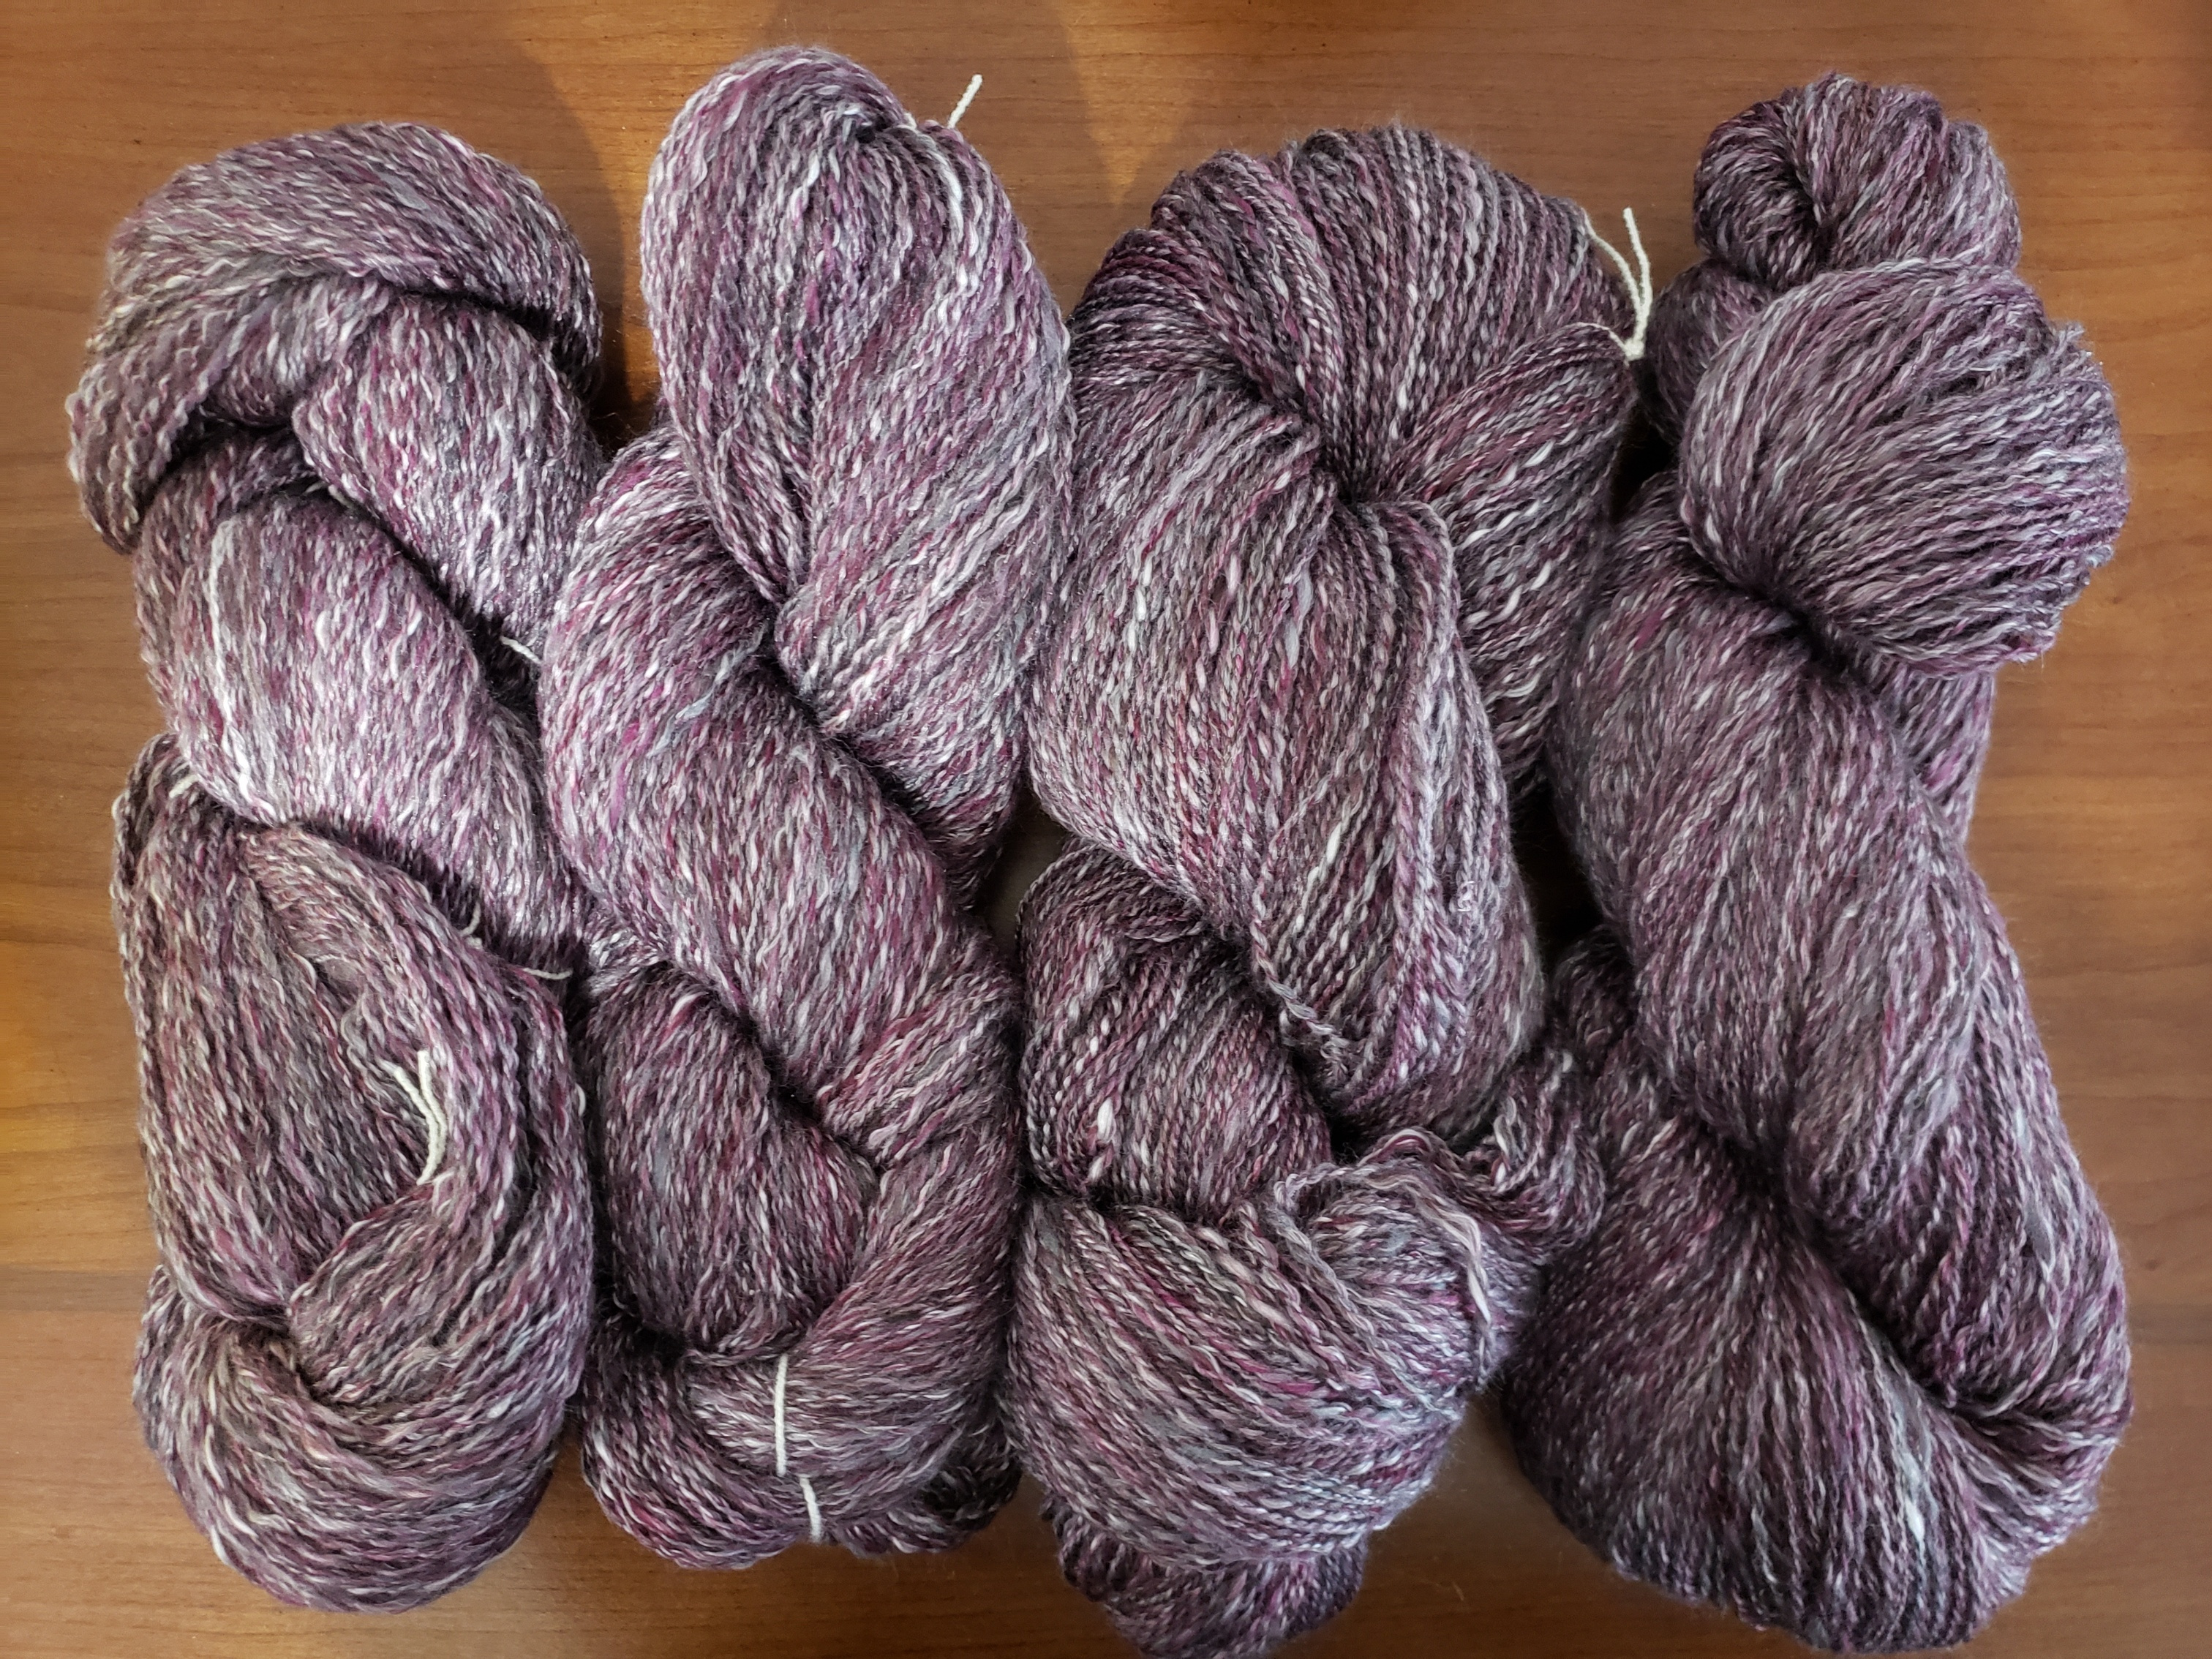 Birthe - Ashford Storm merino/silk handspun yarn.